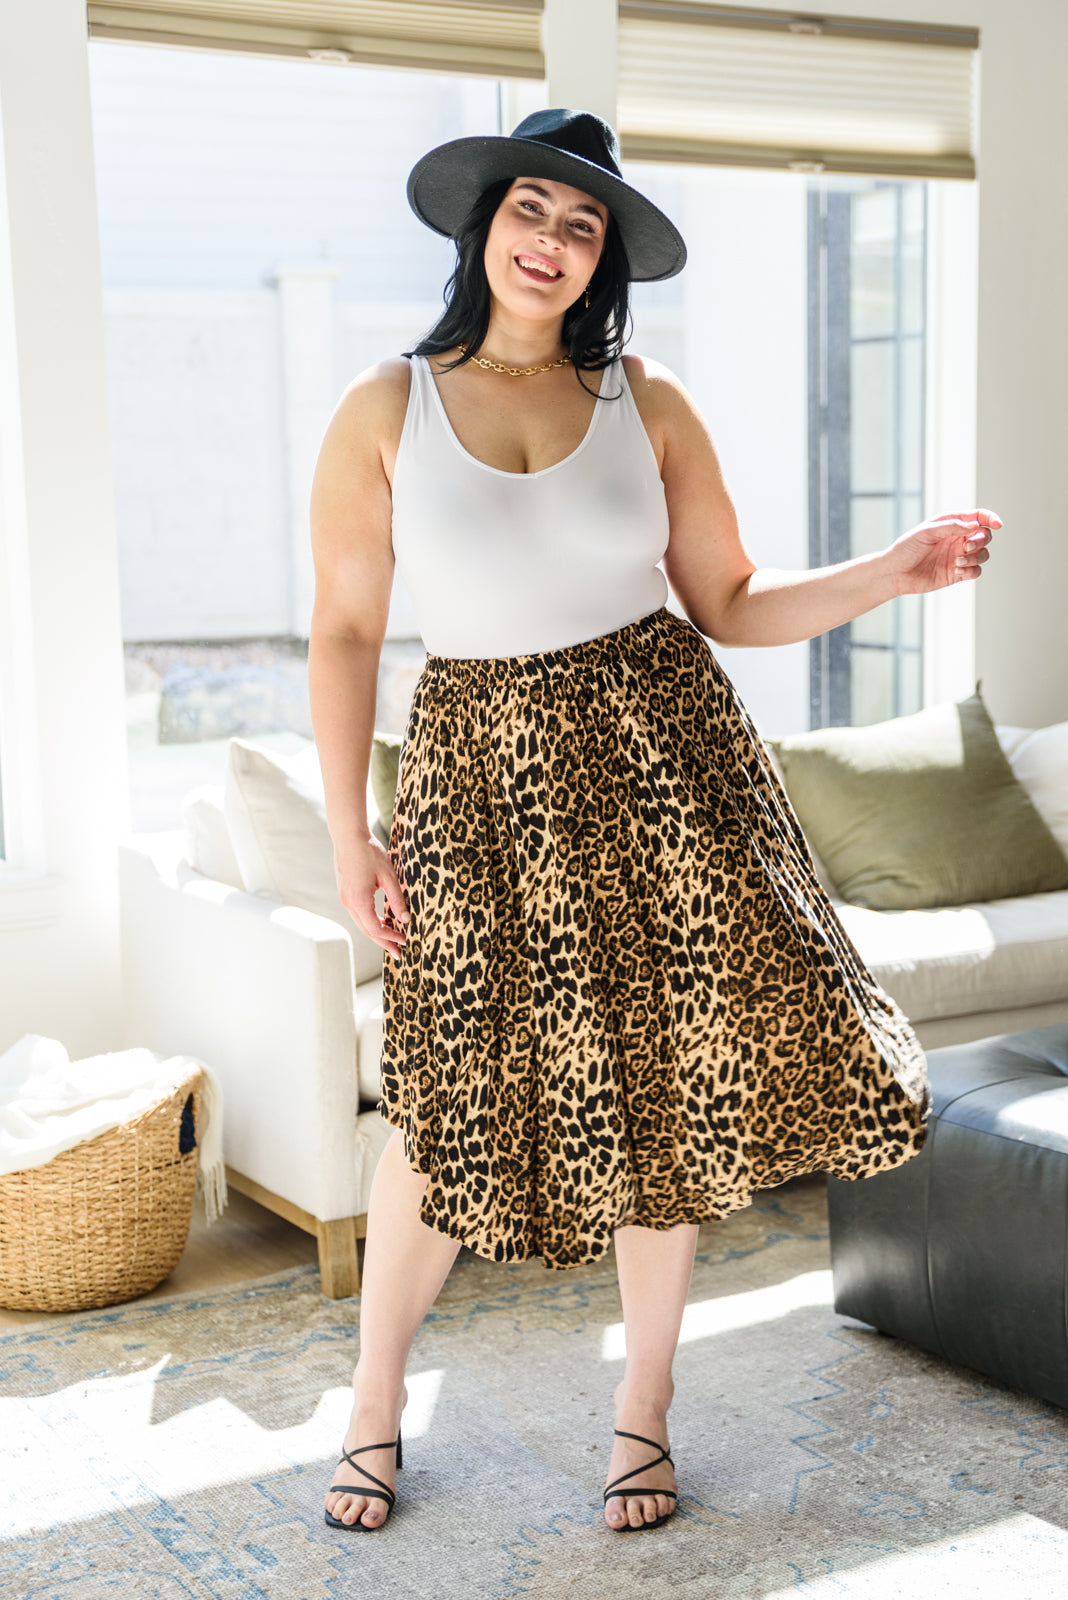 Carefree Animal Print Skirt (Online Exclusive)